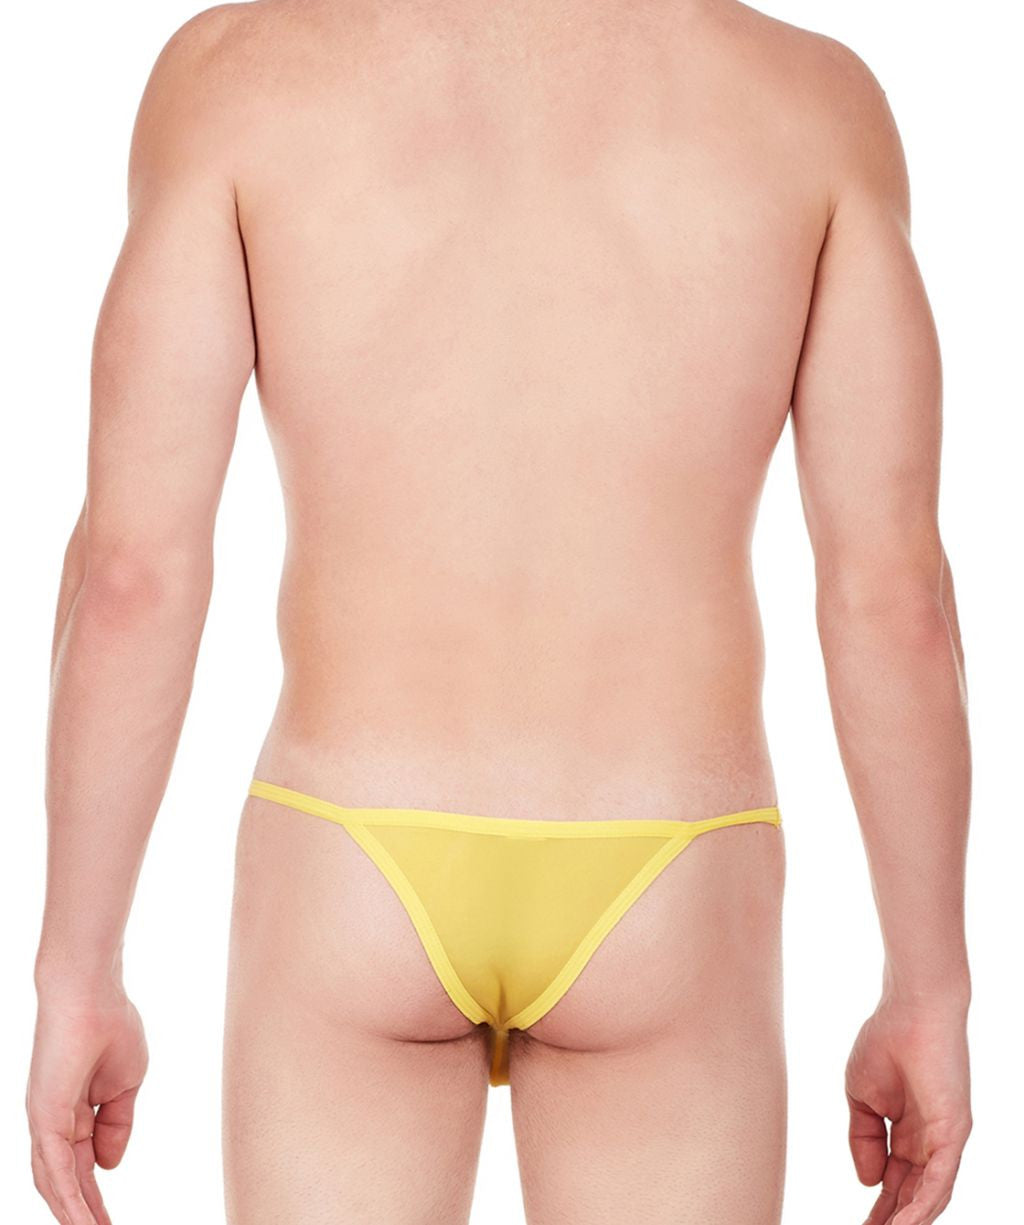 Men Bikini Briefs - Buy Bikini Briefs for Men Online in India